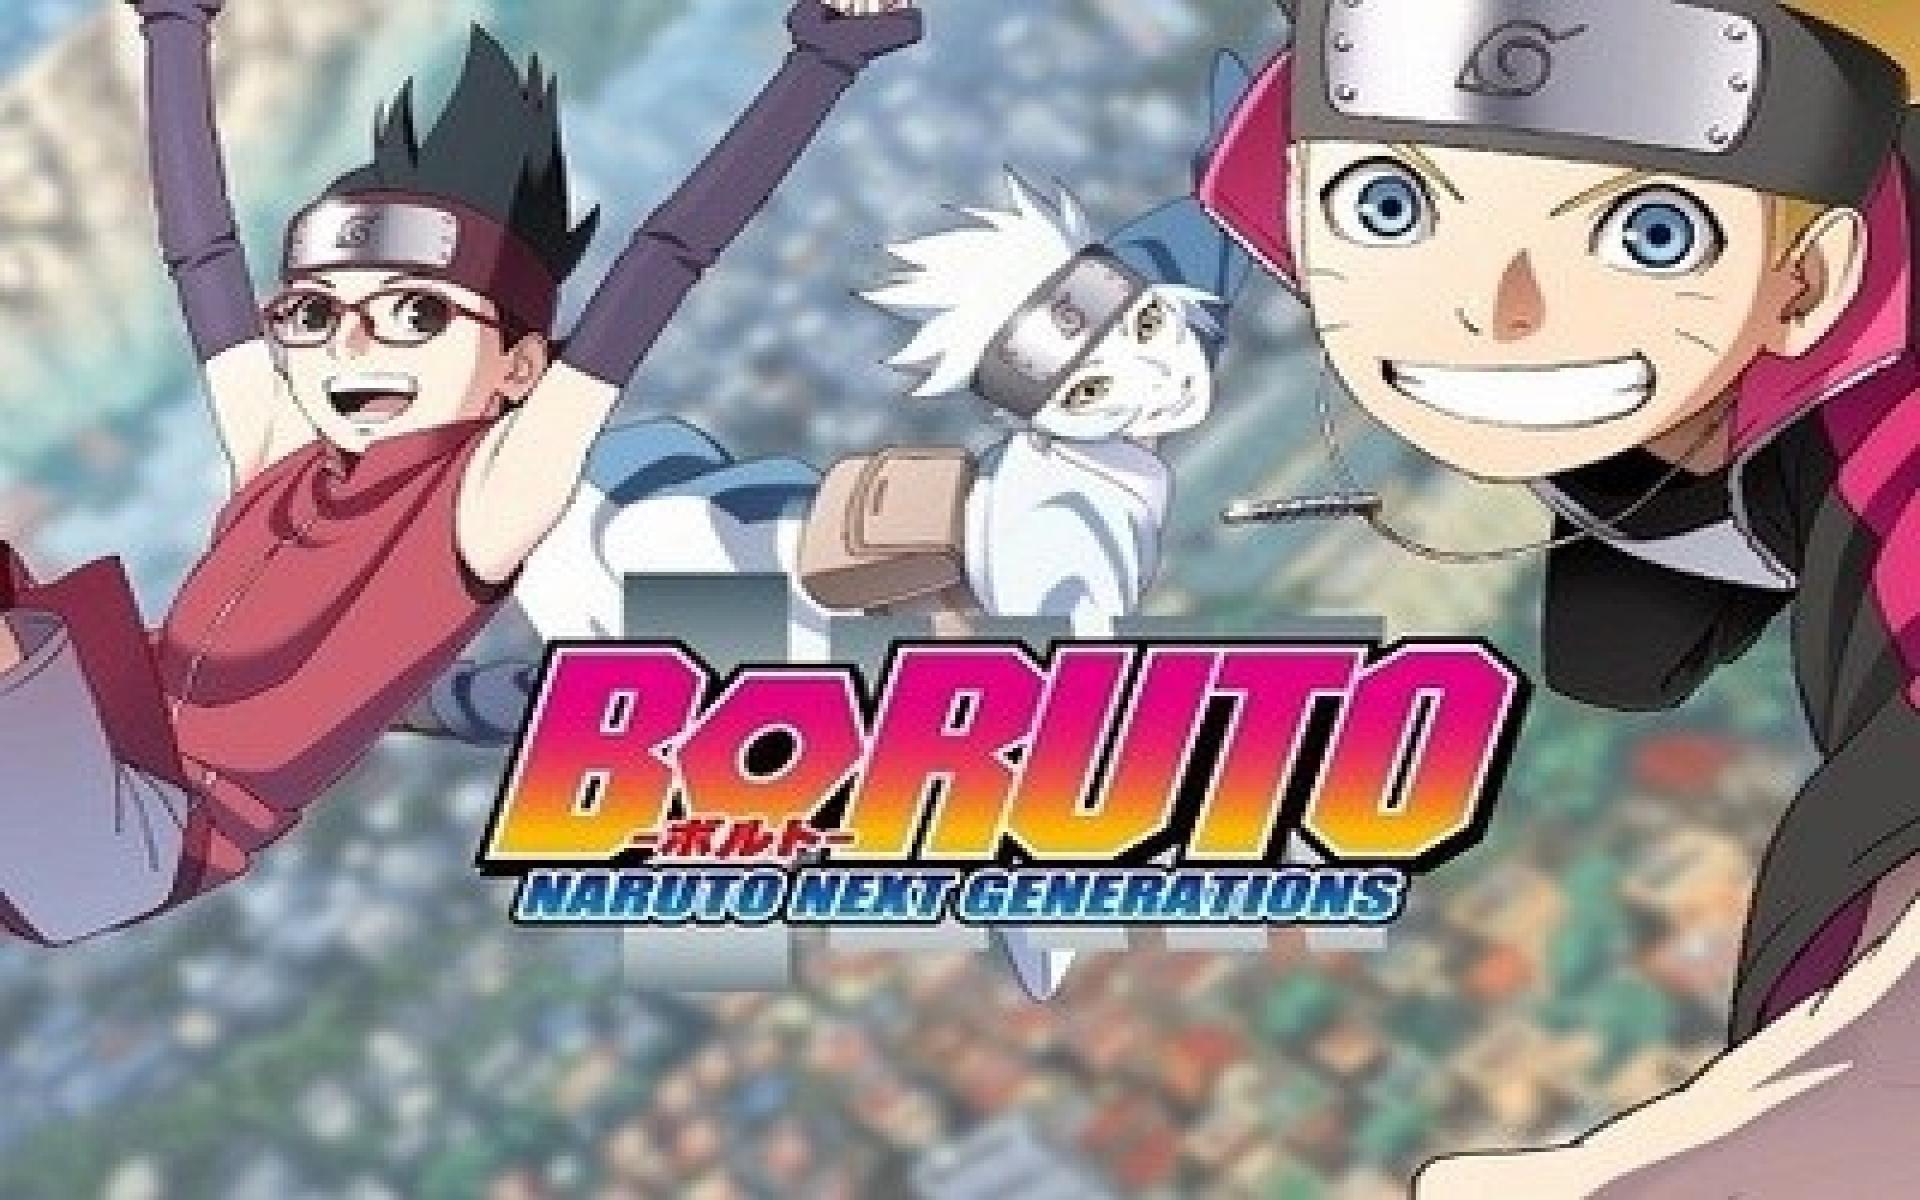 Boruto Naruto Next Generations Wallpapers - Top Free Boruto Naruto Next Generations Backgrounds ...